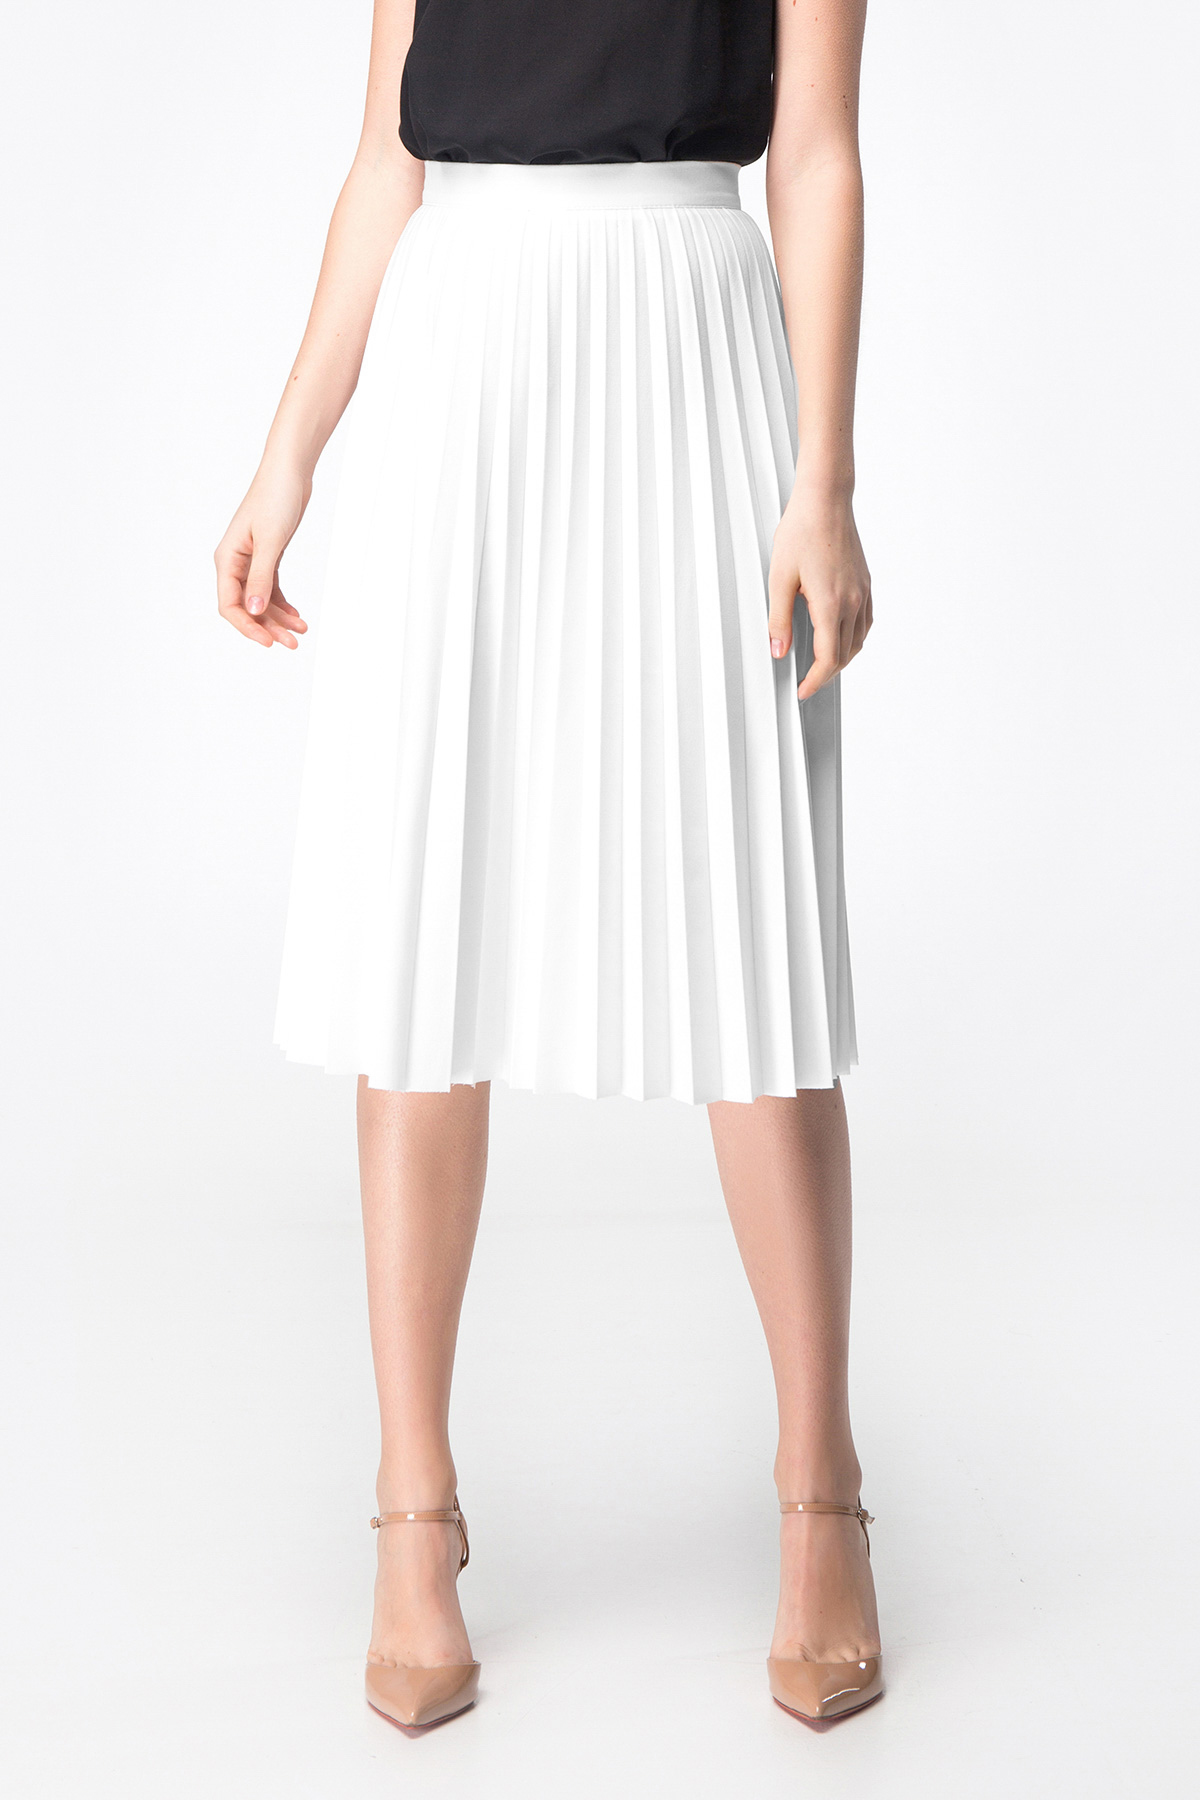 White pleated skirt, photo 1